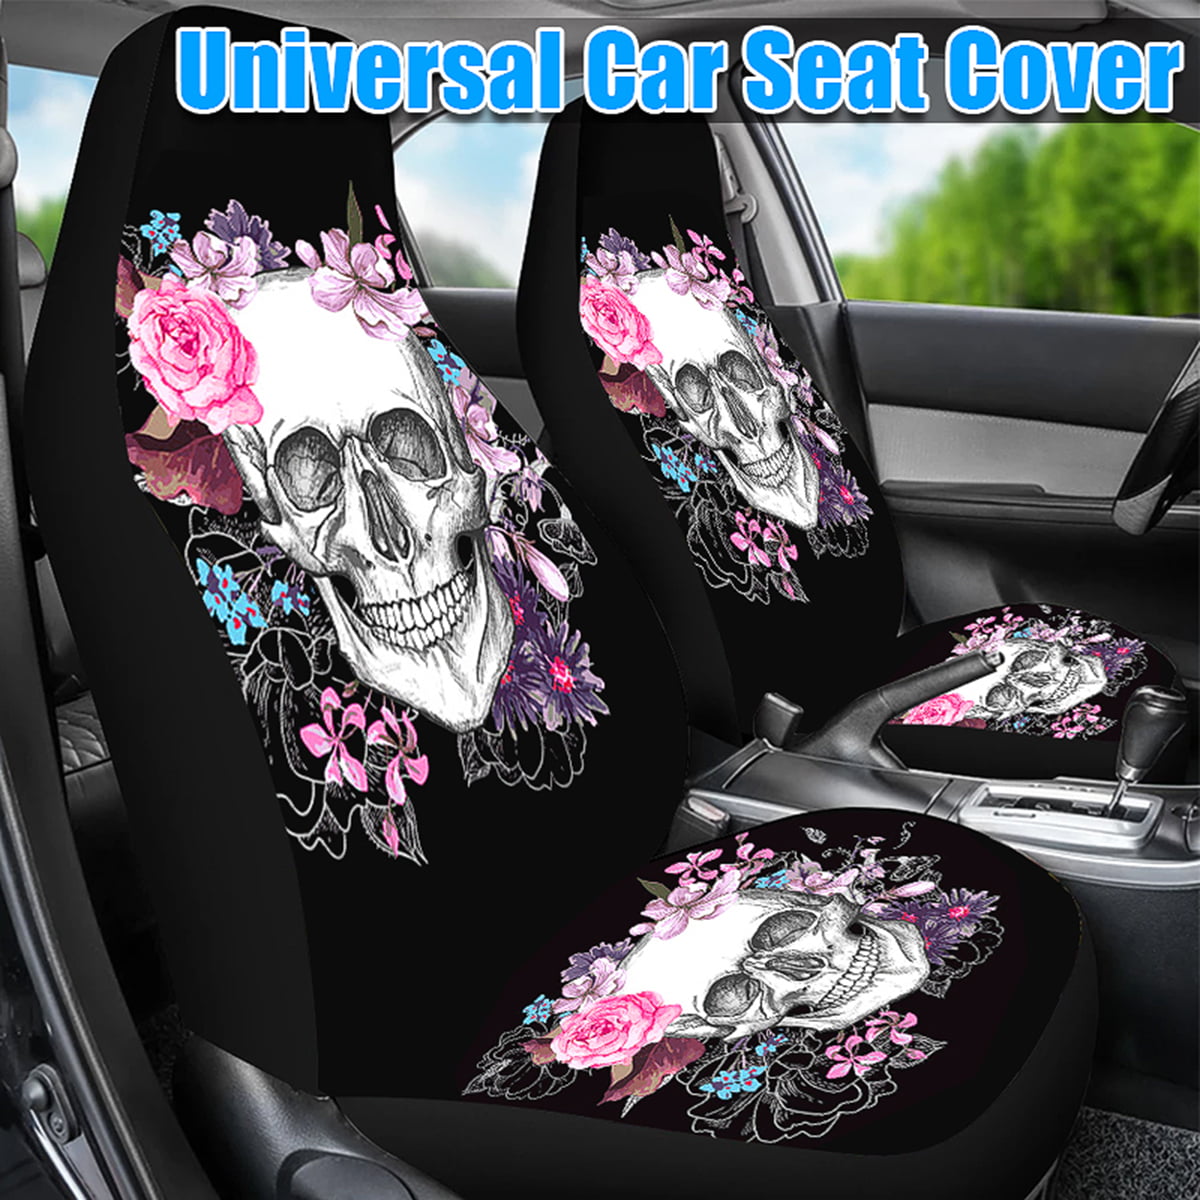 INTERESTPRINT Vintage Sugar Skull Car Seat Covers Set of 2 Vehicle Seat Protector Car Covers for Auto Cars Sedan SUV 